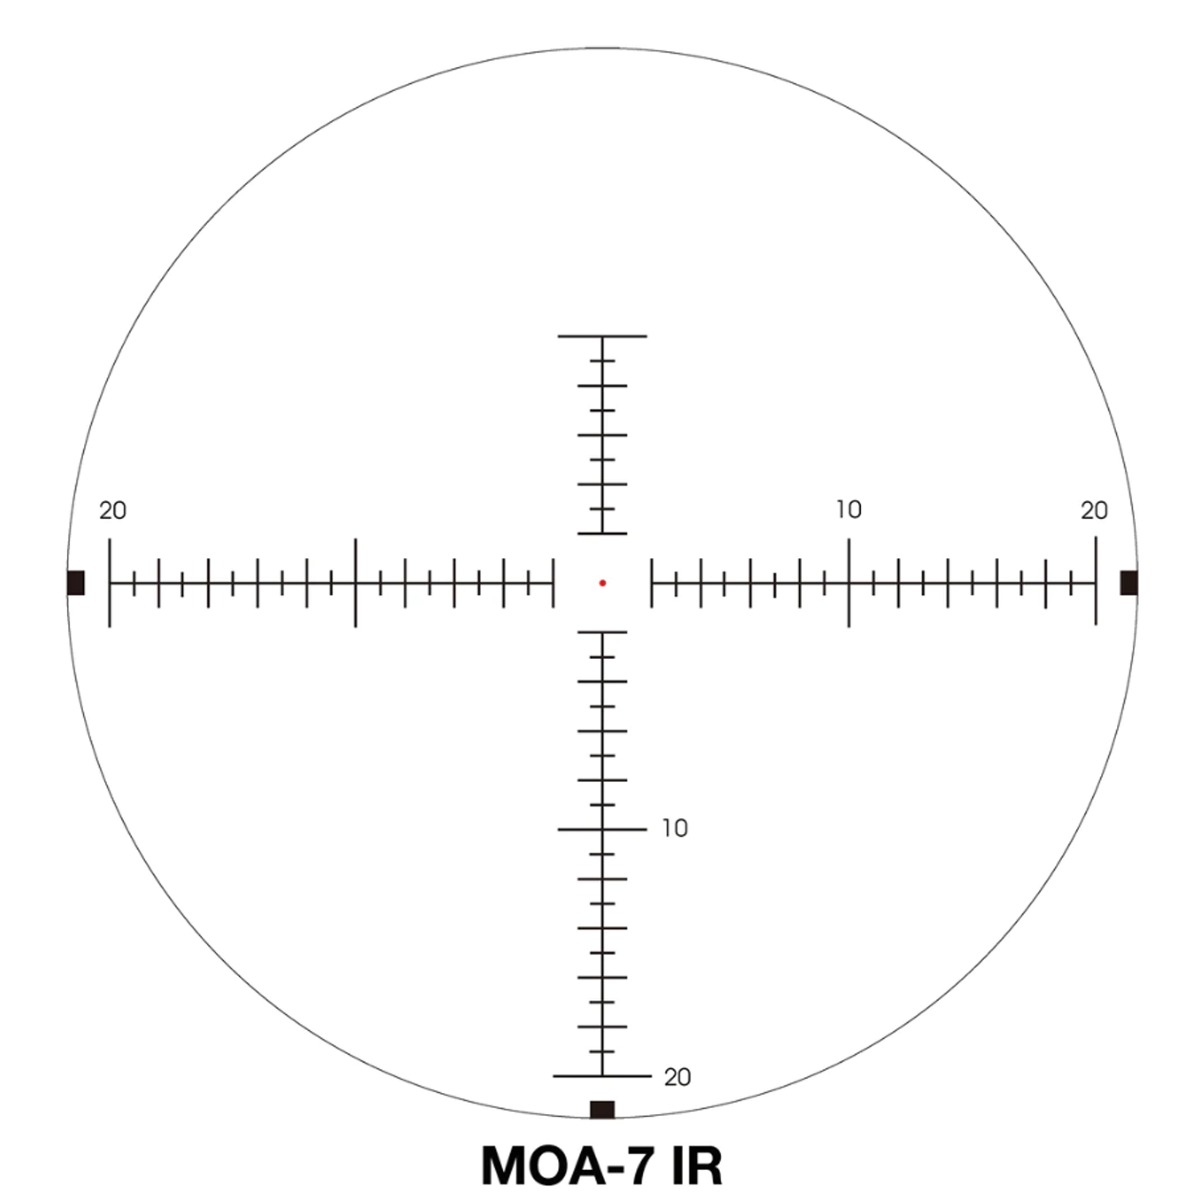 MOA-7 IR reticle